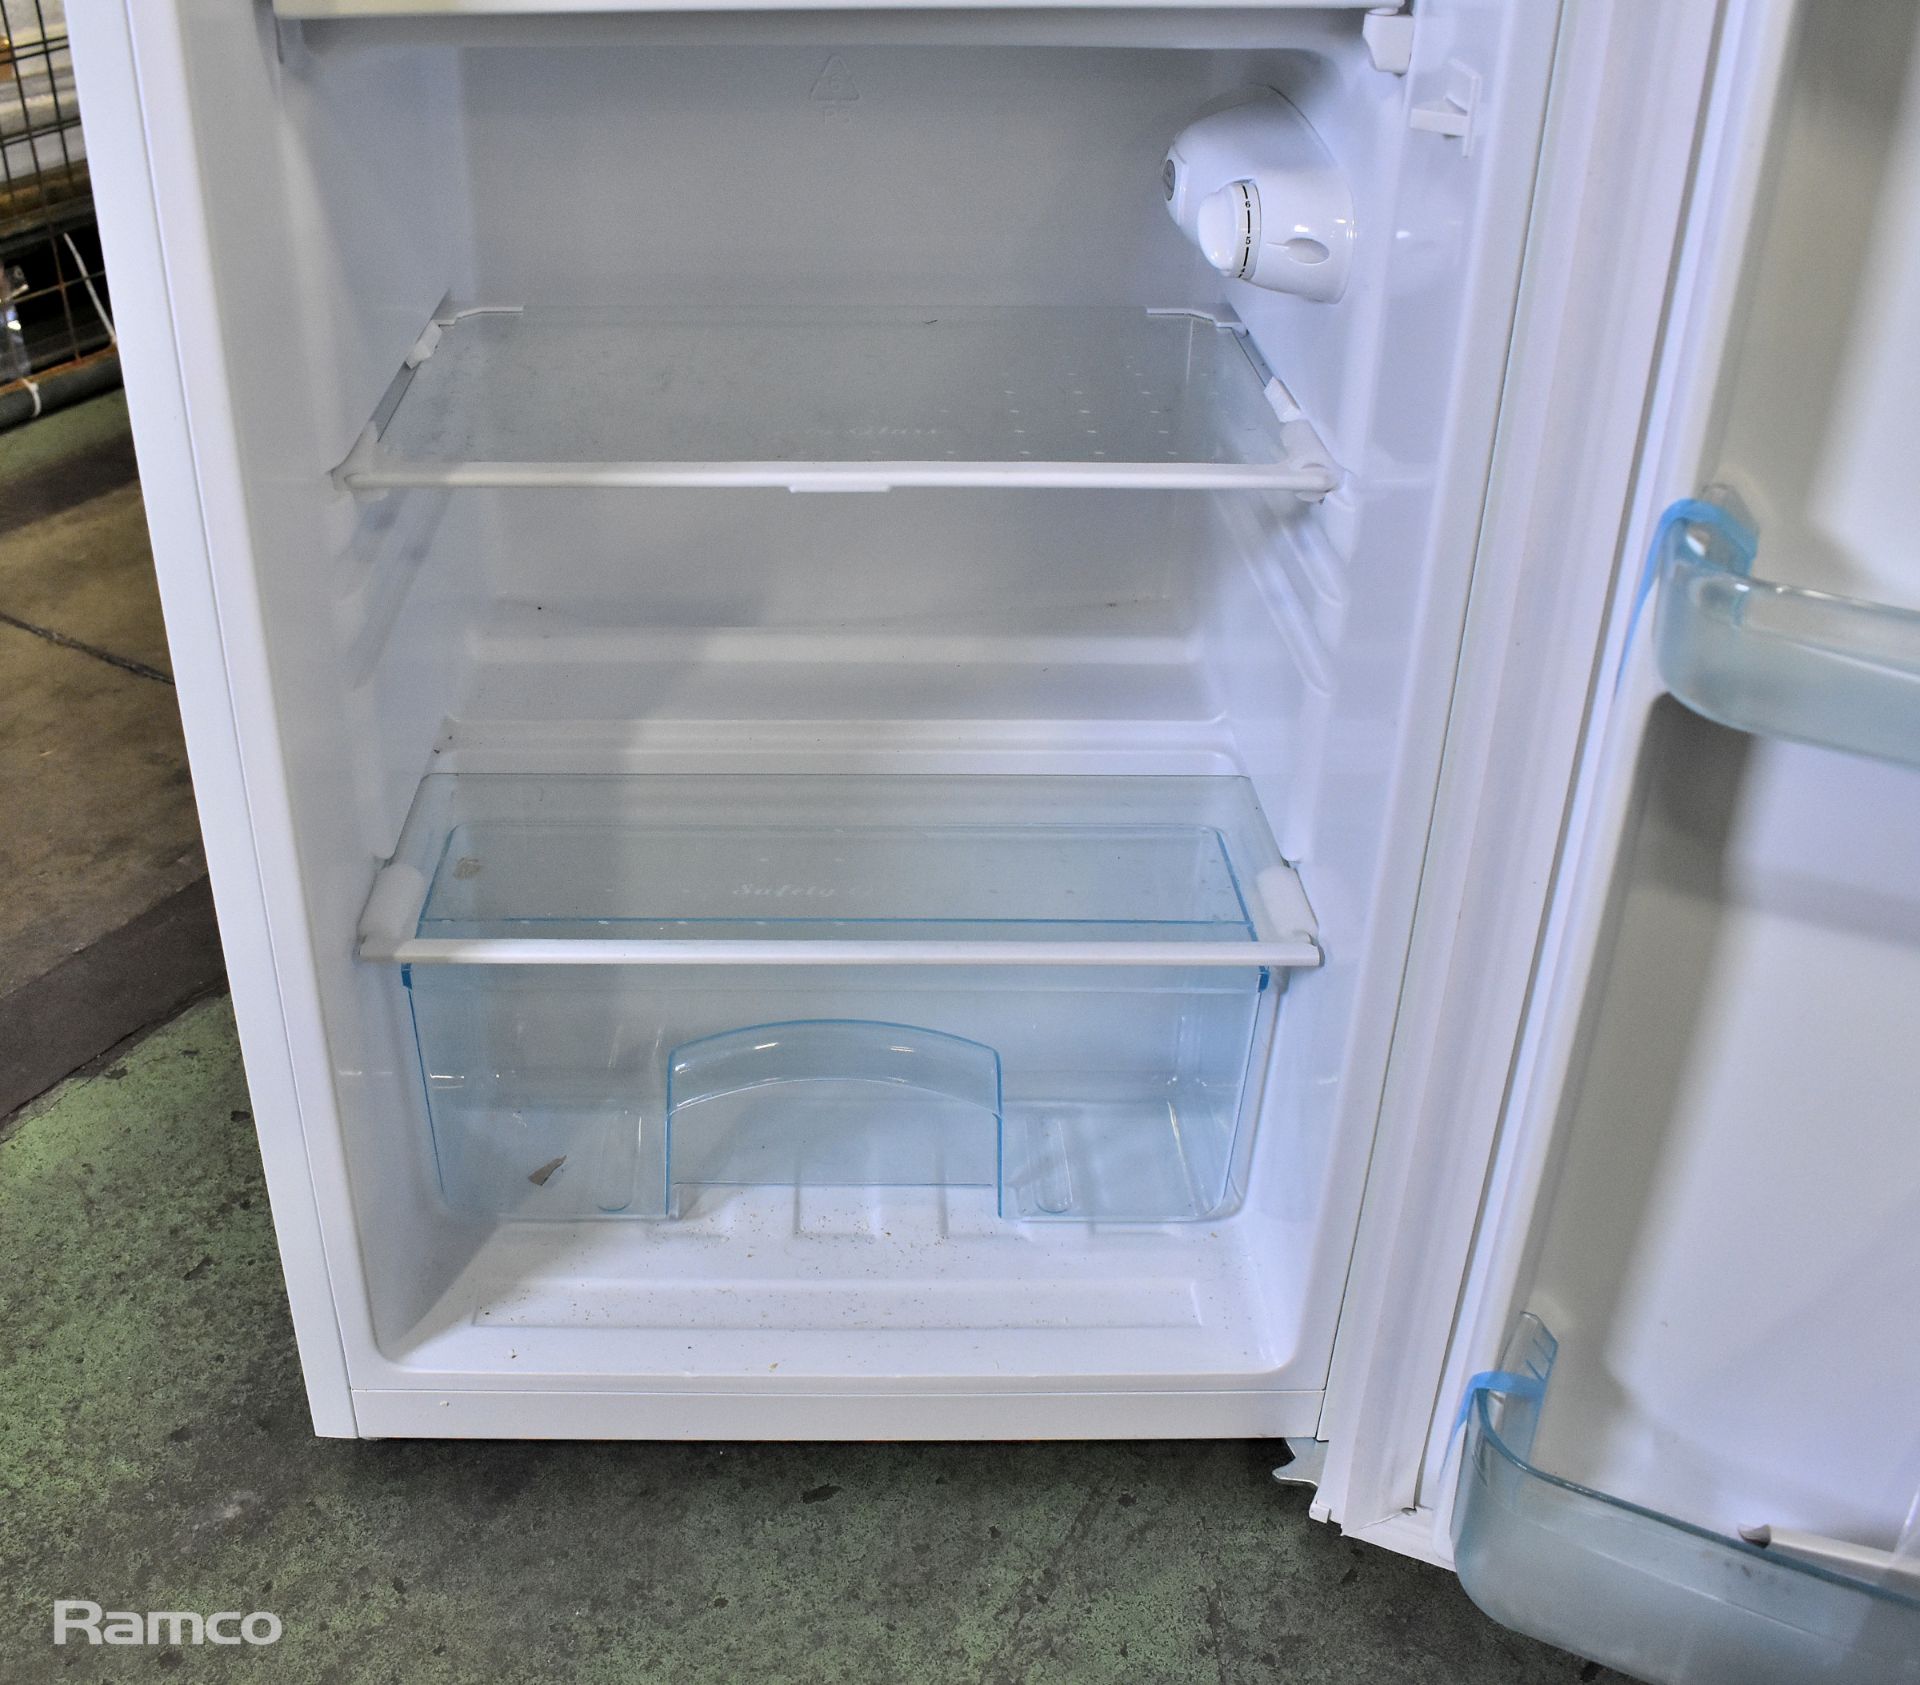 Iceking RK113AP2 under counter fridge, Vax C90-AS-B-AS Astrata bagless cylinder vacuum - Image 5 of 13